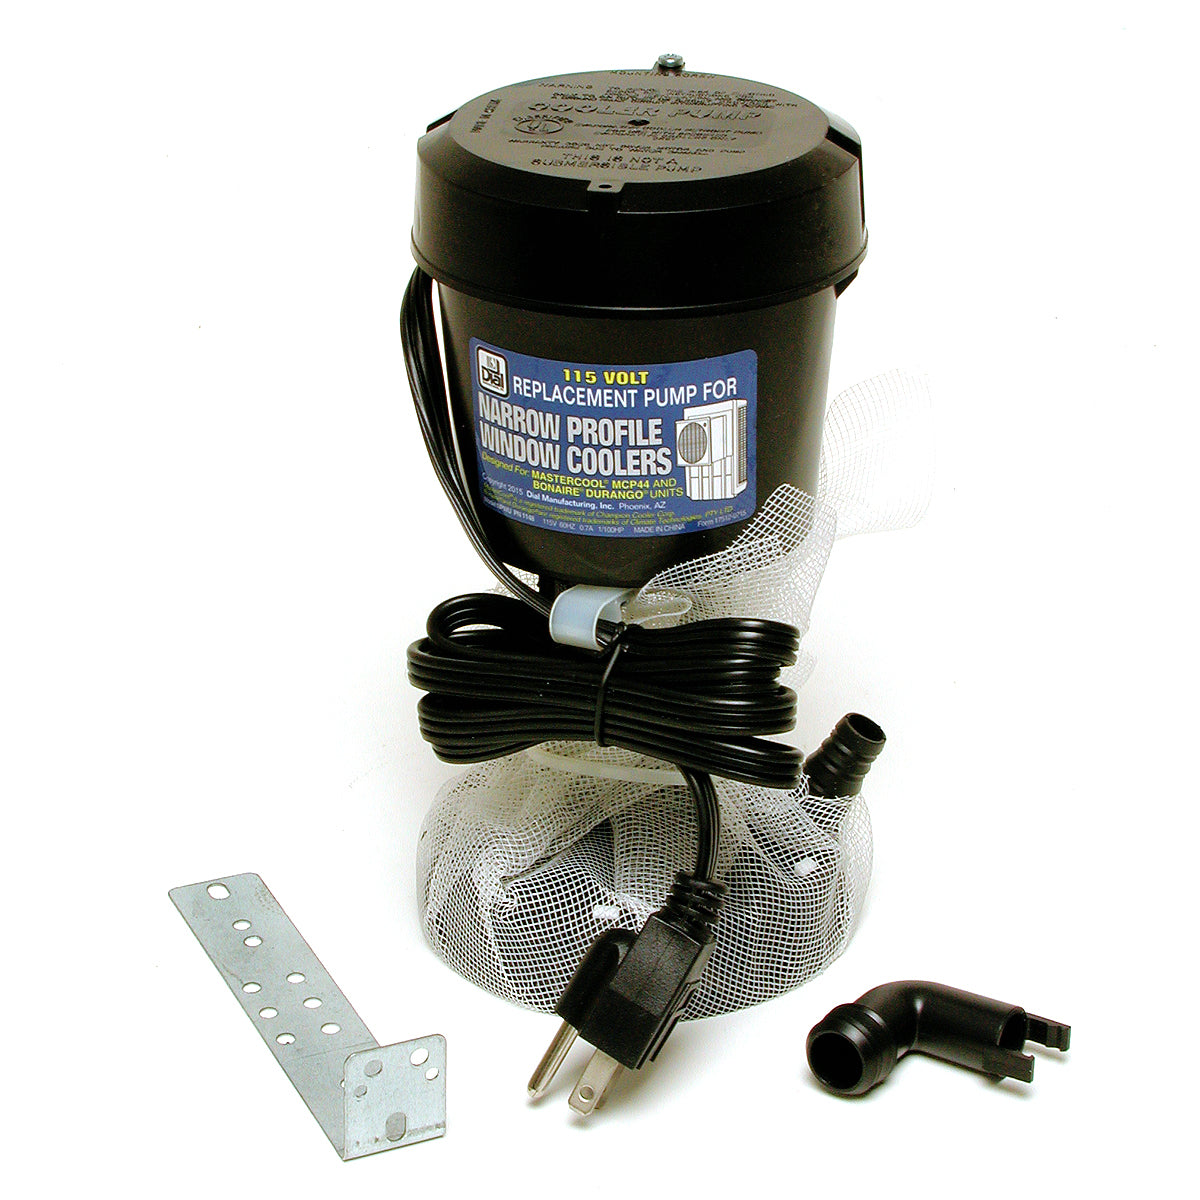 Dial Narrow Profile Cooler Replacement Pump